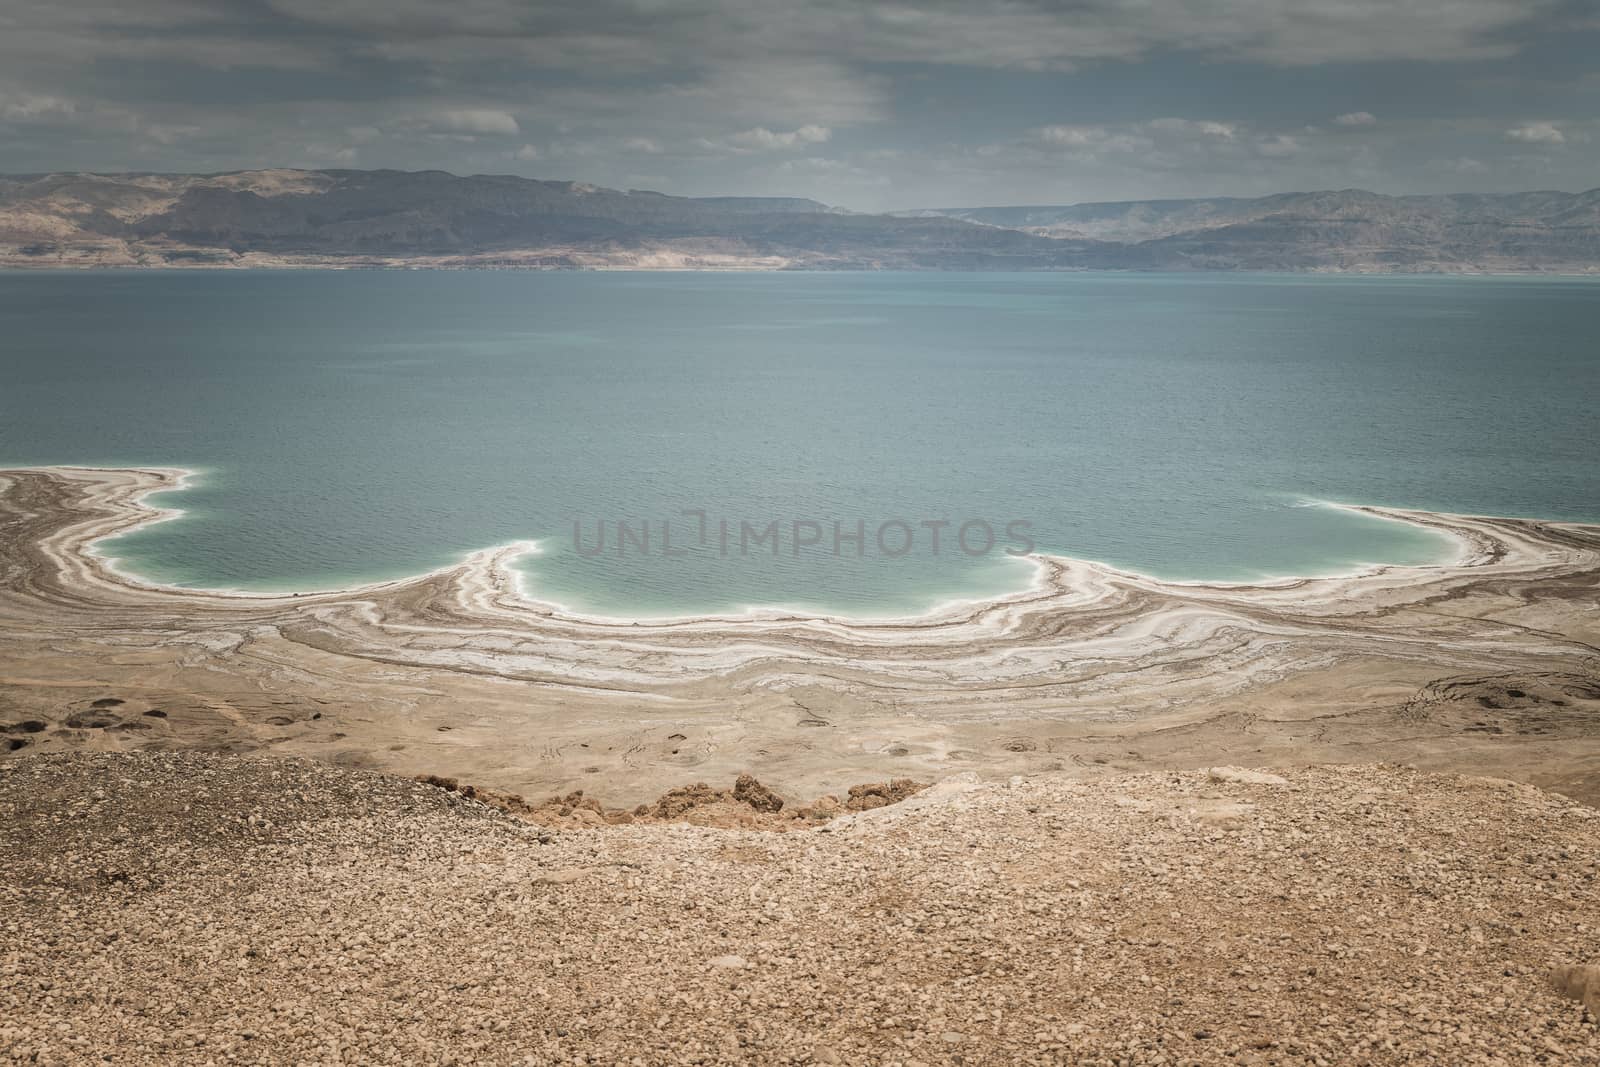 Desert landscape of Israel, Dead Sea by compuinfoto